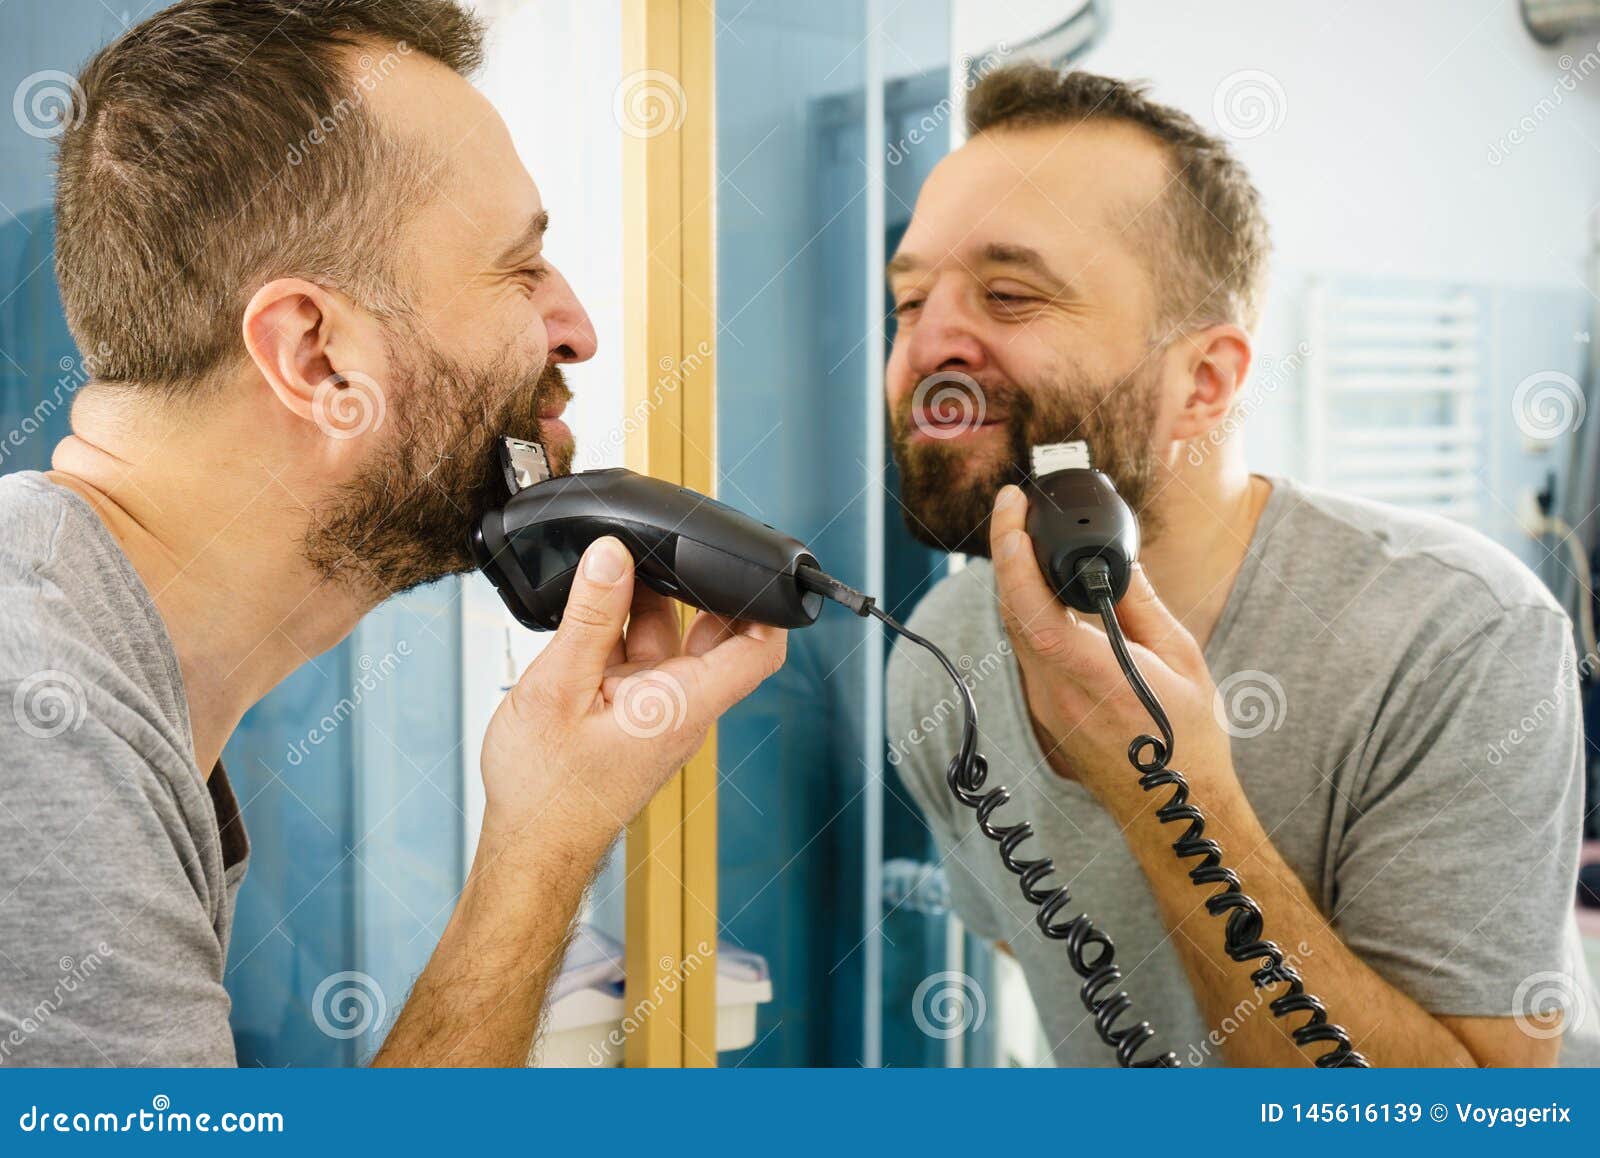 https://thumbs.dreamstime.com/z/man-shaving-trimming-his-beard-bearded-man-looking-himself-mirror-trimmng-shaving-his-beard-using-electric-timmer-razor-145616139.jpg